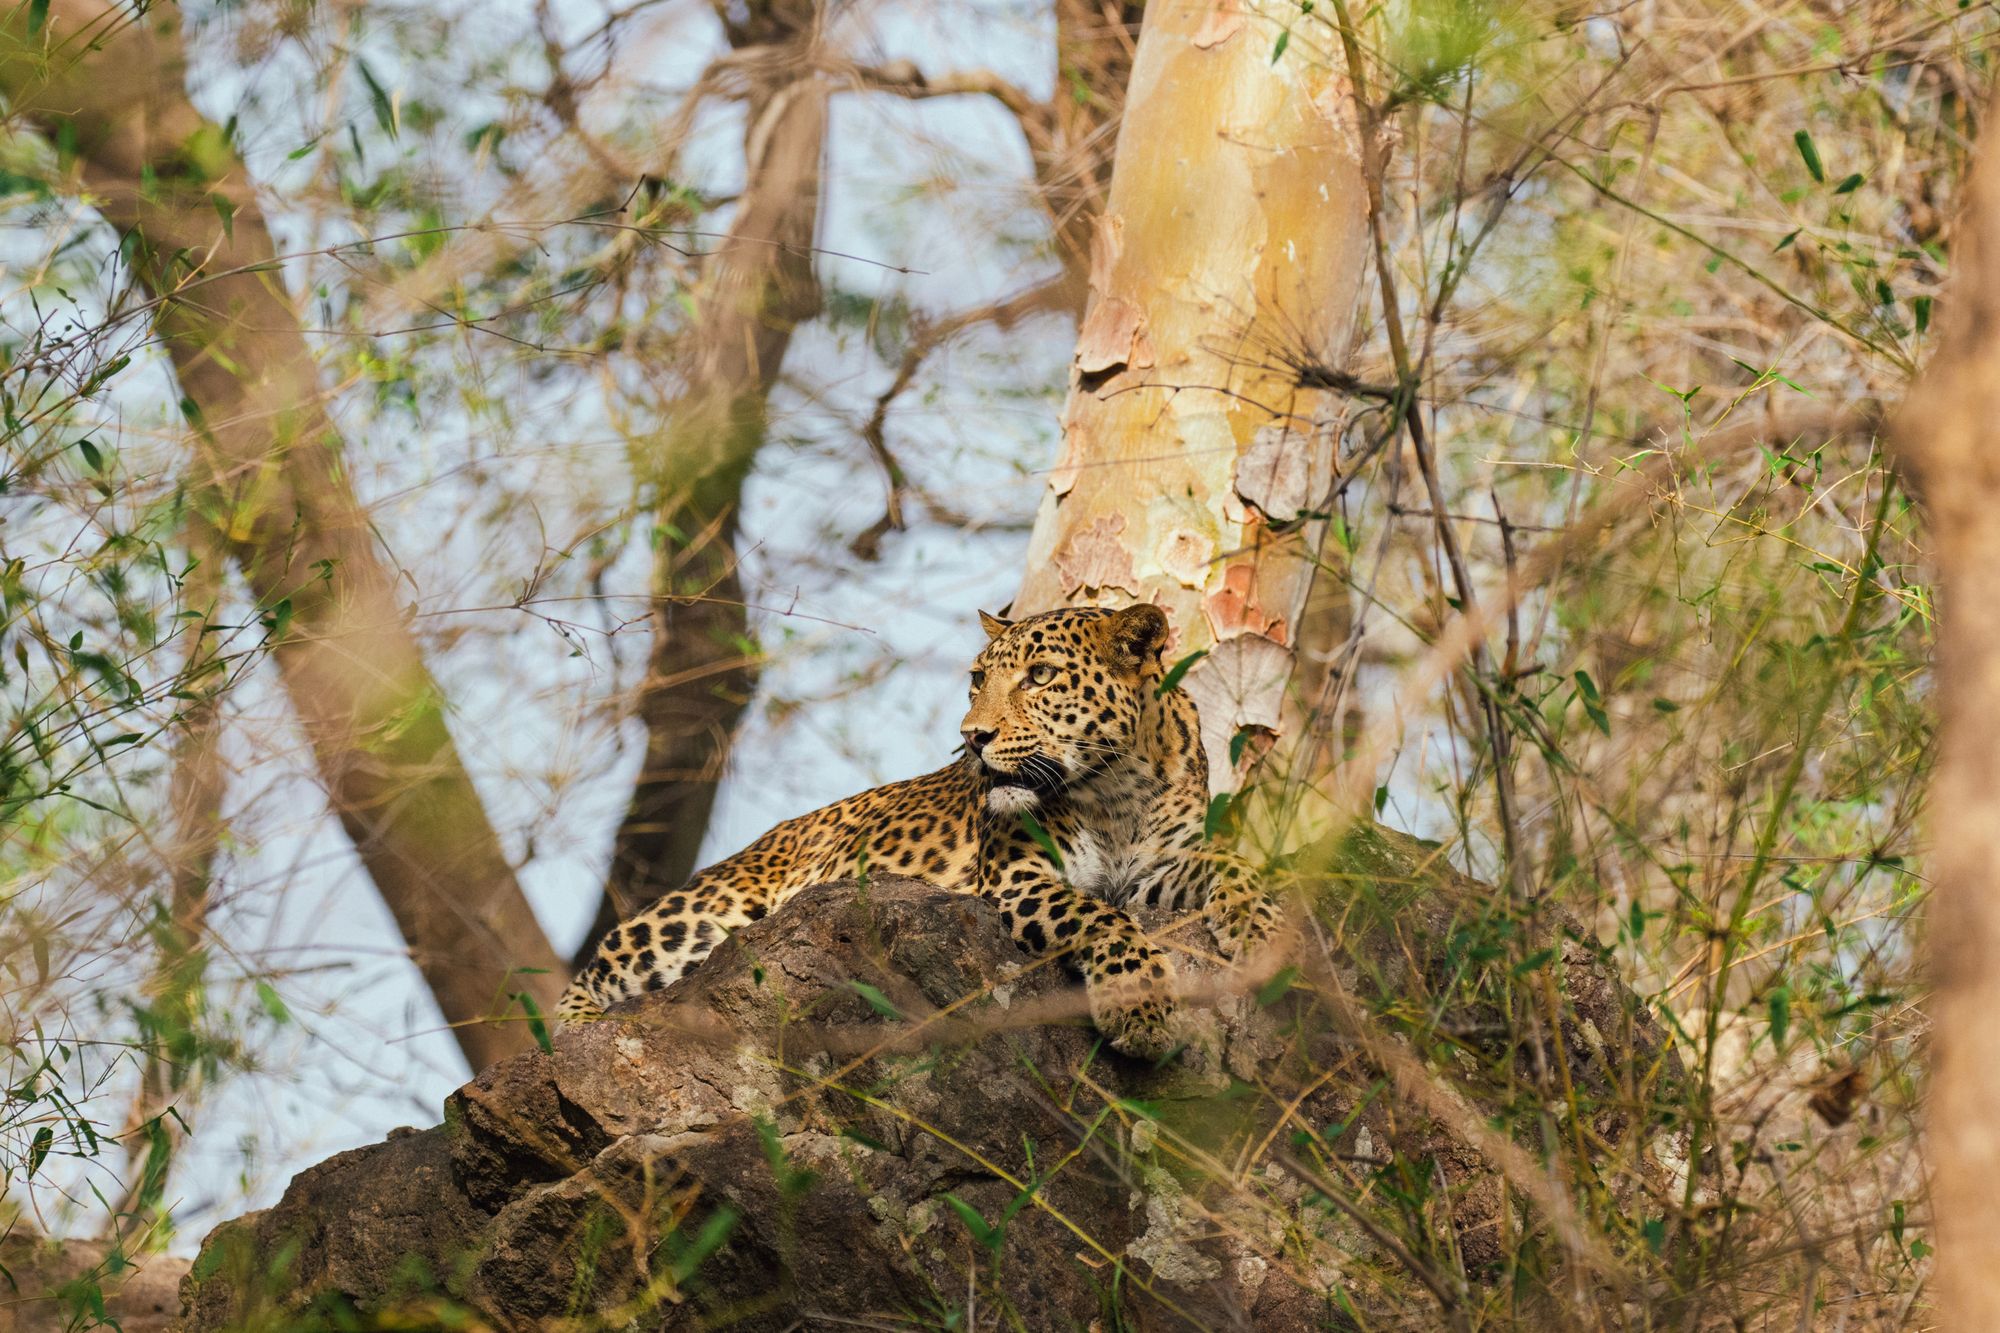 Leopard at Bandhavgarh National Park in Madhya Pradesh in India By Girish Menon | www.shutterstock.com